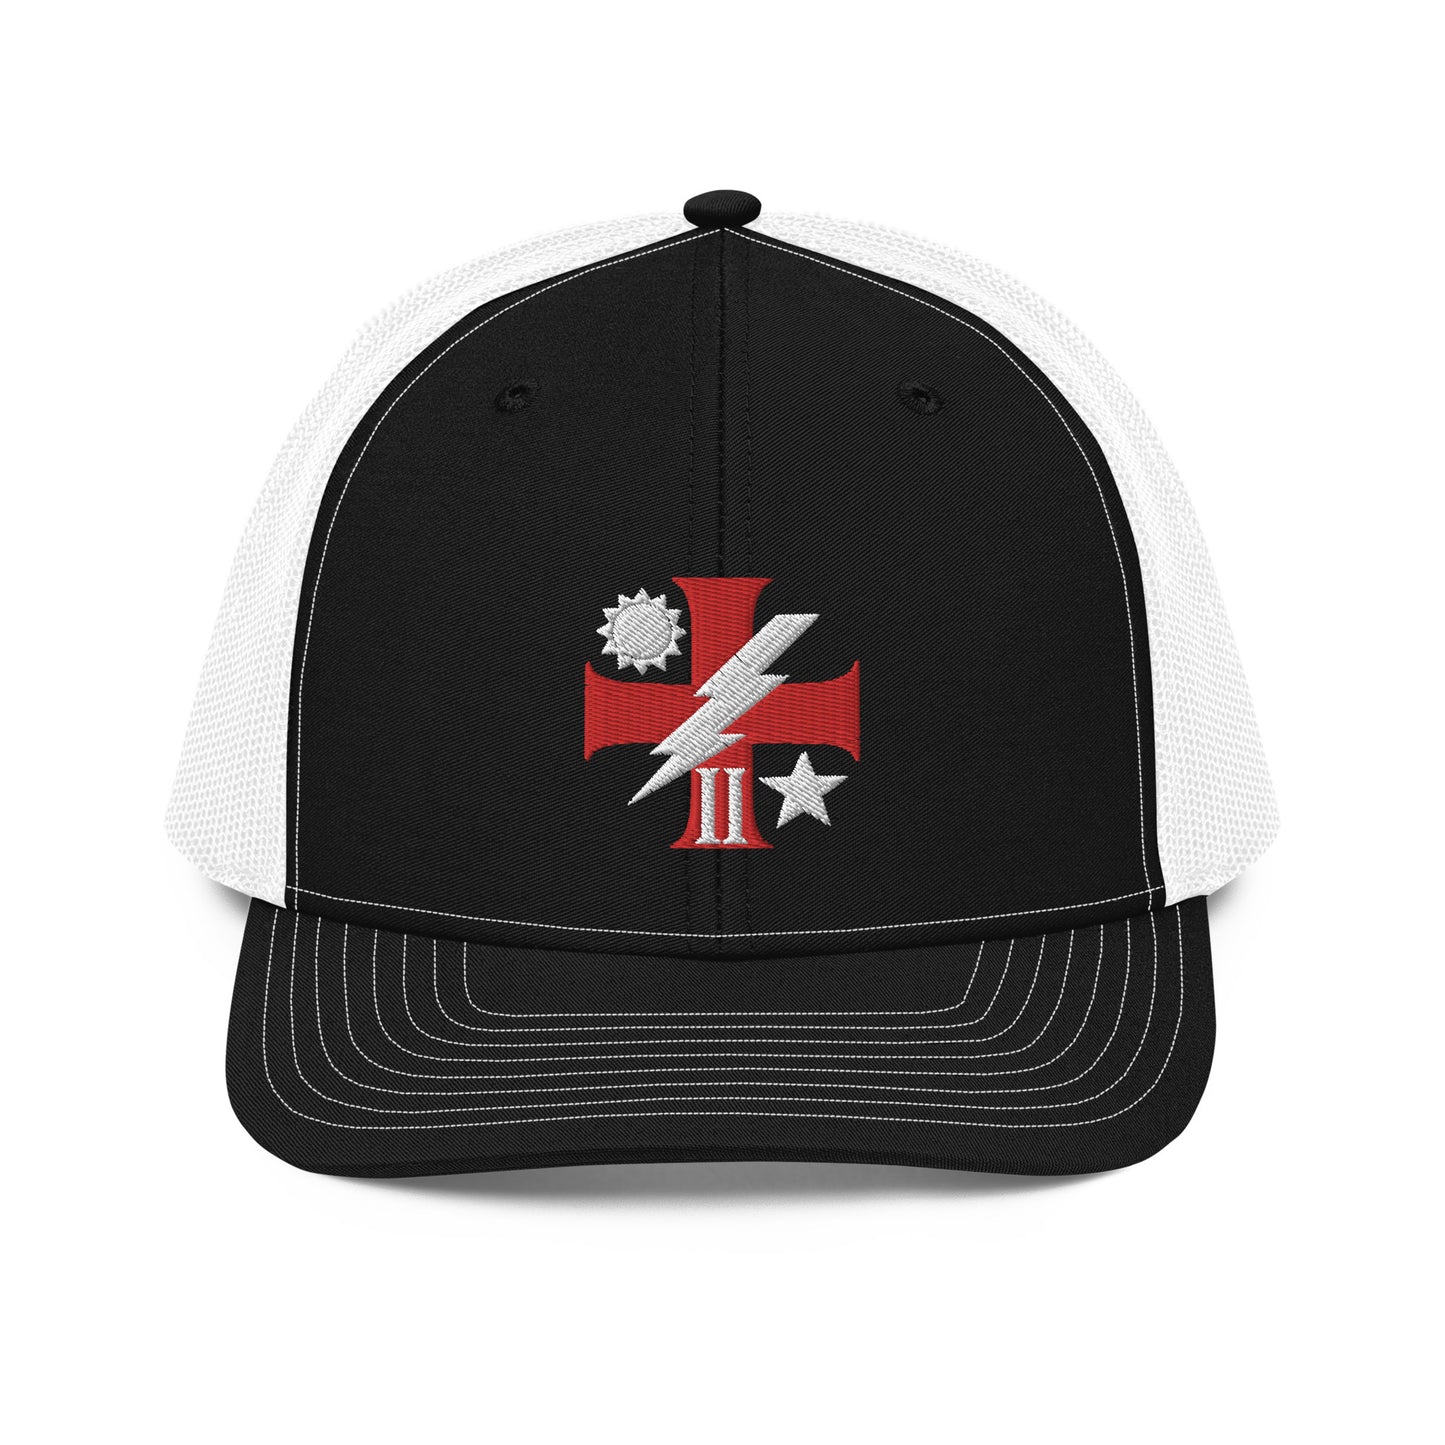 2d Battalion UMT Trucker Hat